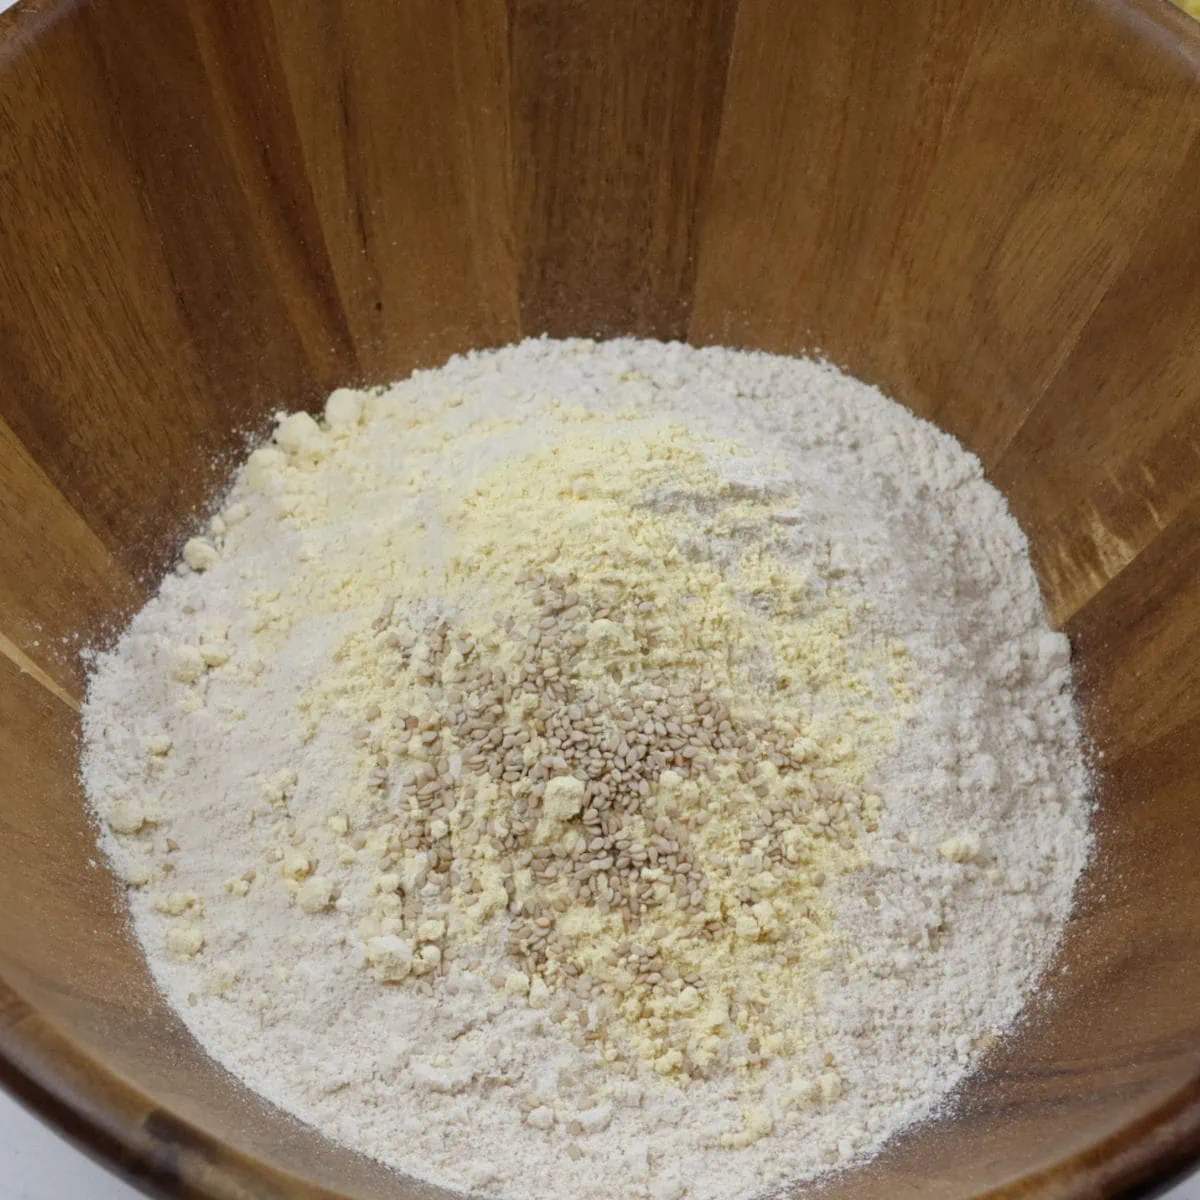 add Sesame seeds to the dough